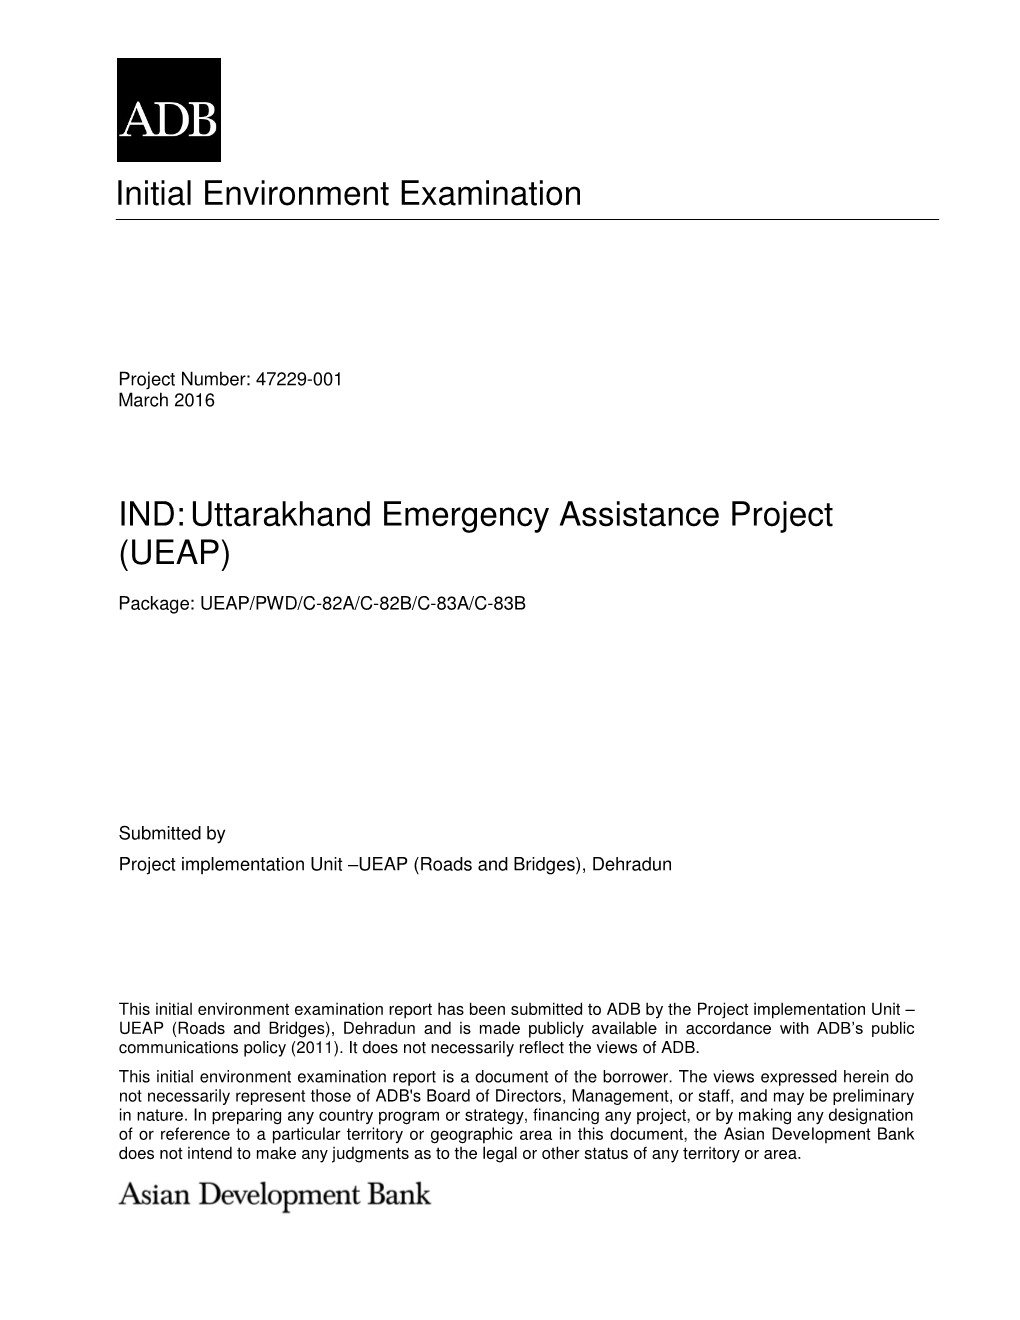 Initial Environment Examination IND:Uttarakhand Emergency Assistance Project (UEAP)